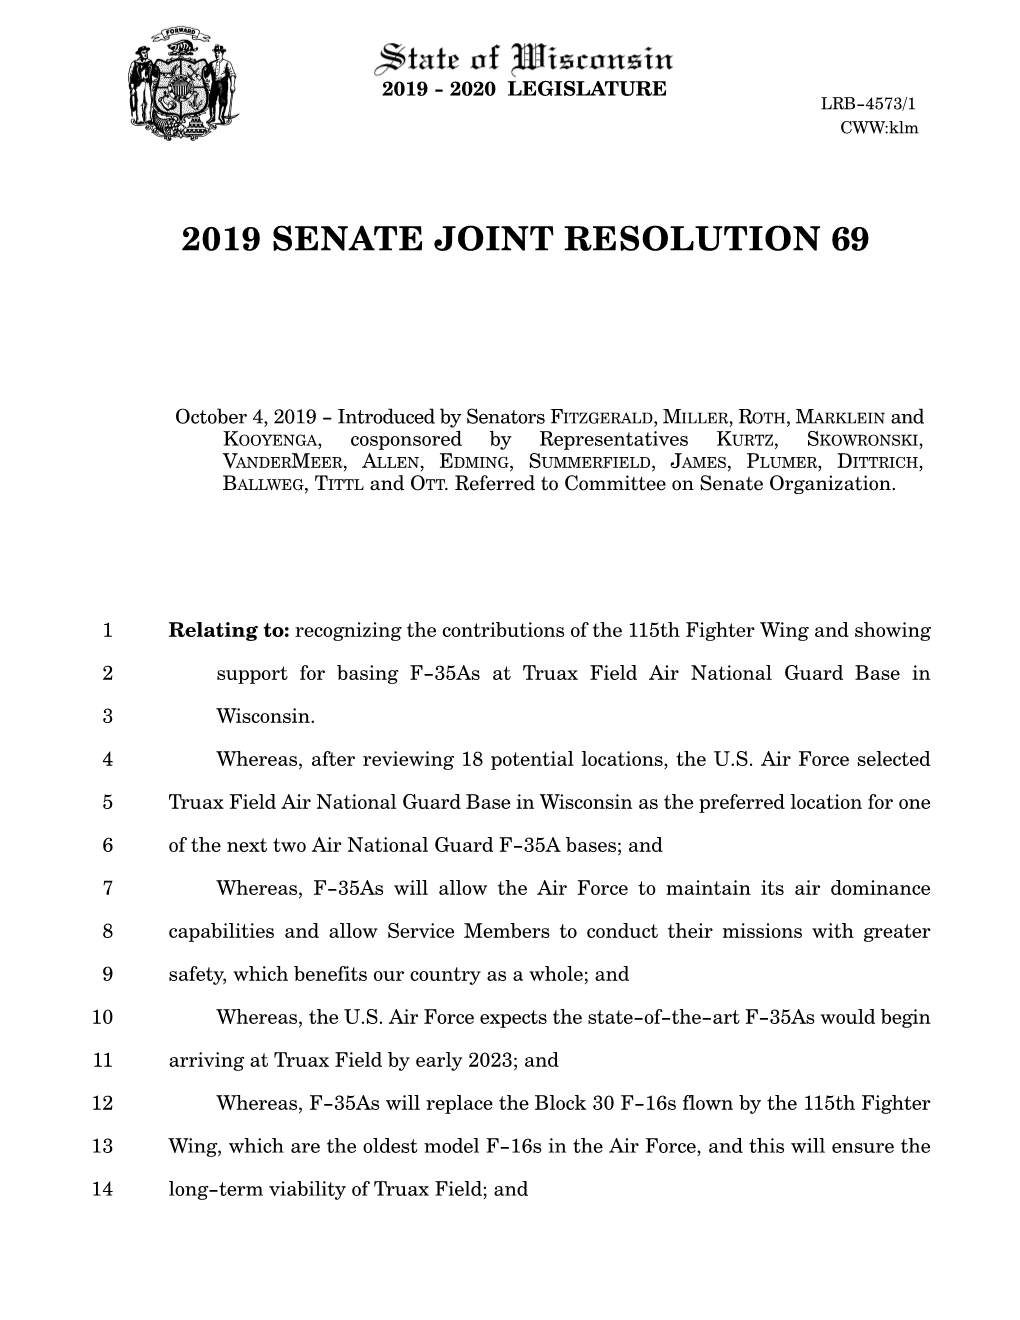 2019 Senate Joint Resolution 69